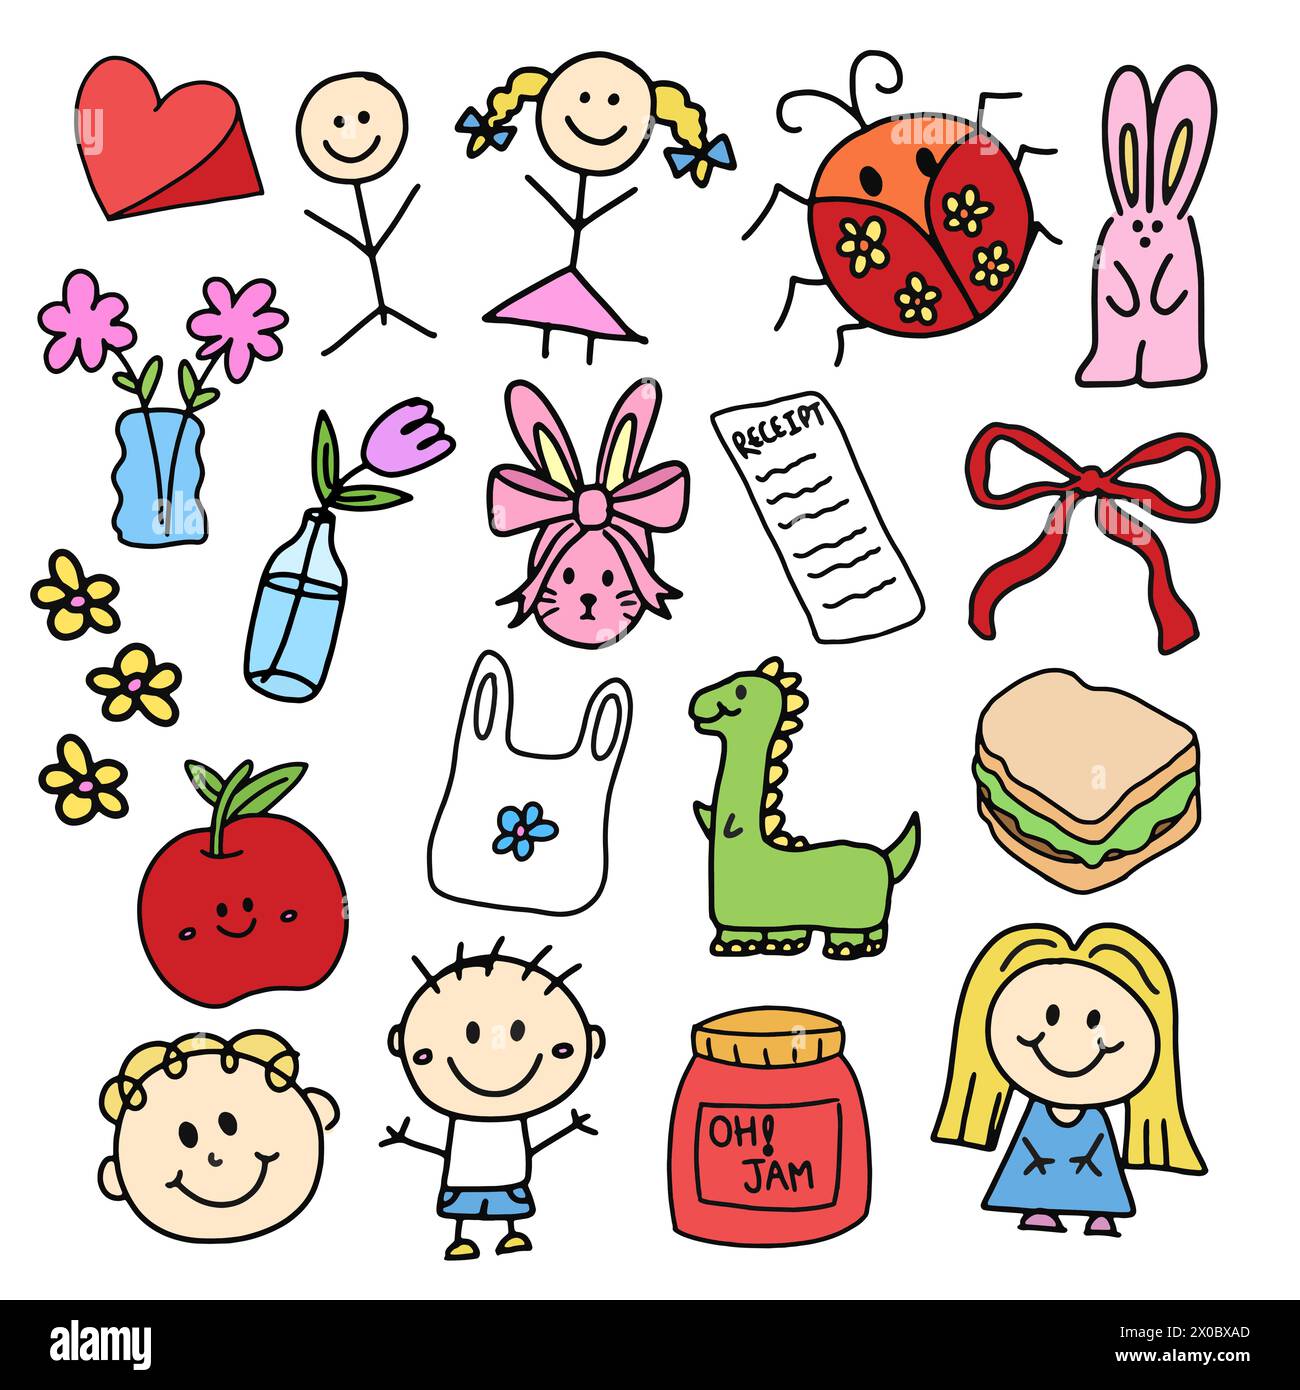 Illustration of kid drawing style of rabbit, dinosaur, ladybug, sandwich, jam jar, flowers, vase, apple, heart, shopping receipt, ribbon and children Stock Vector